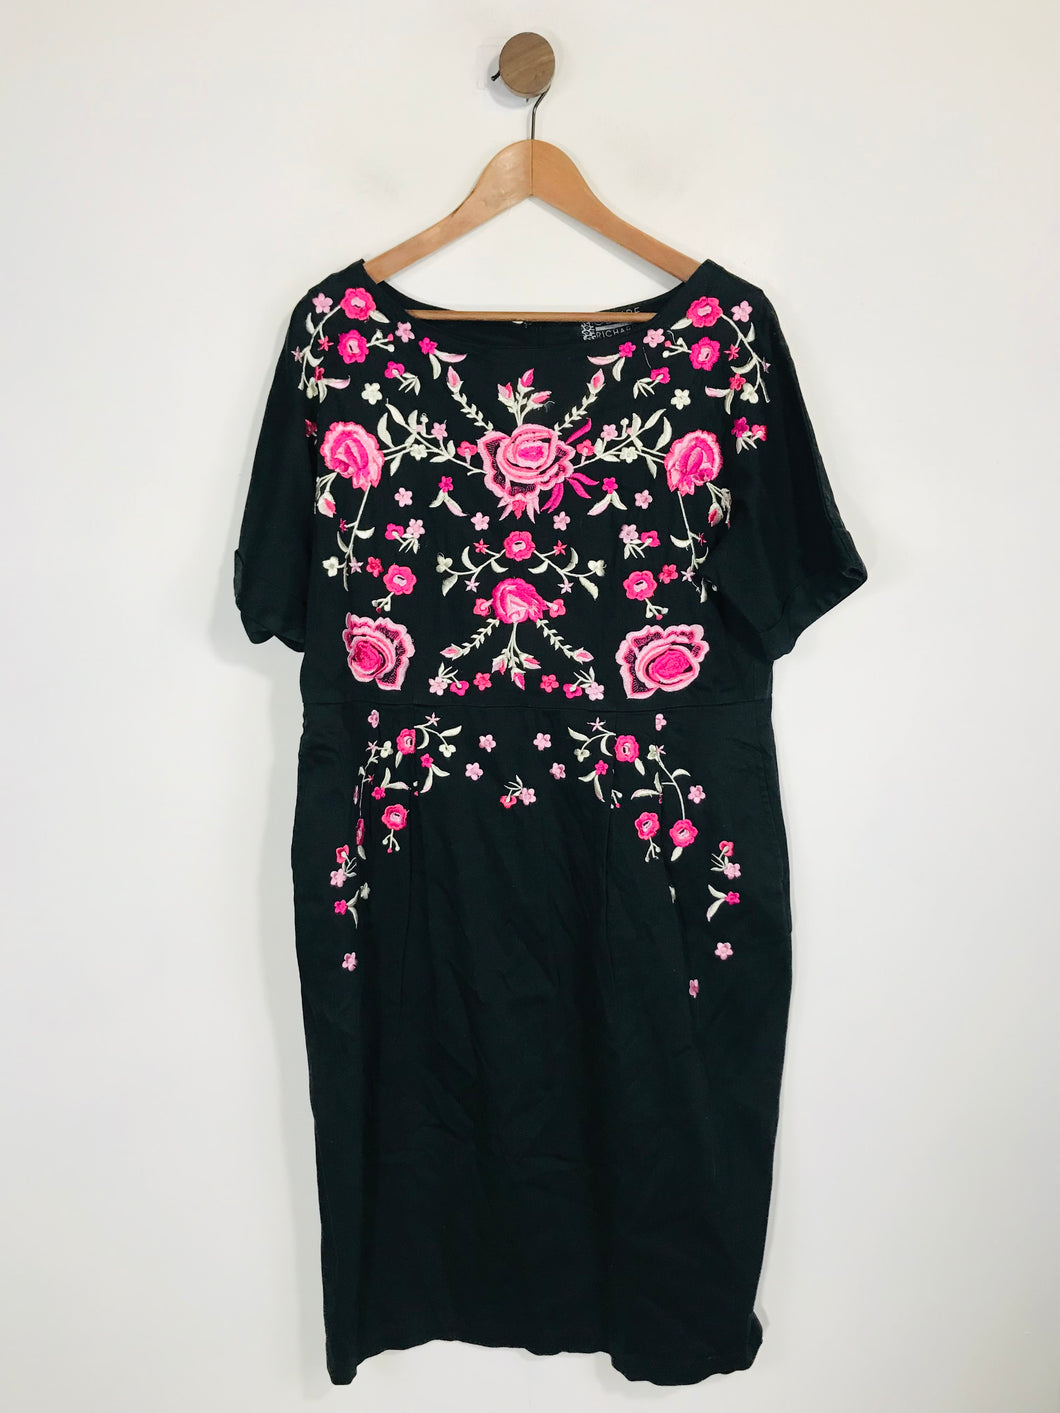 Claire Richards Women's Floral Embroidered Sheath Dress | L UK14 | Black